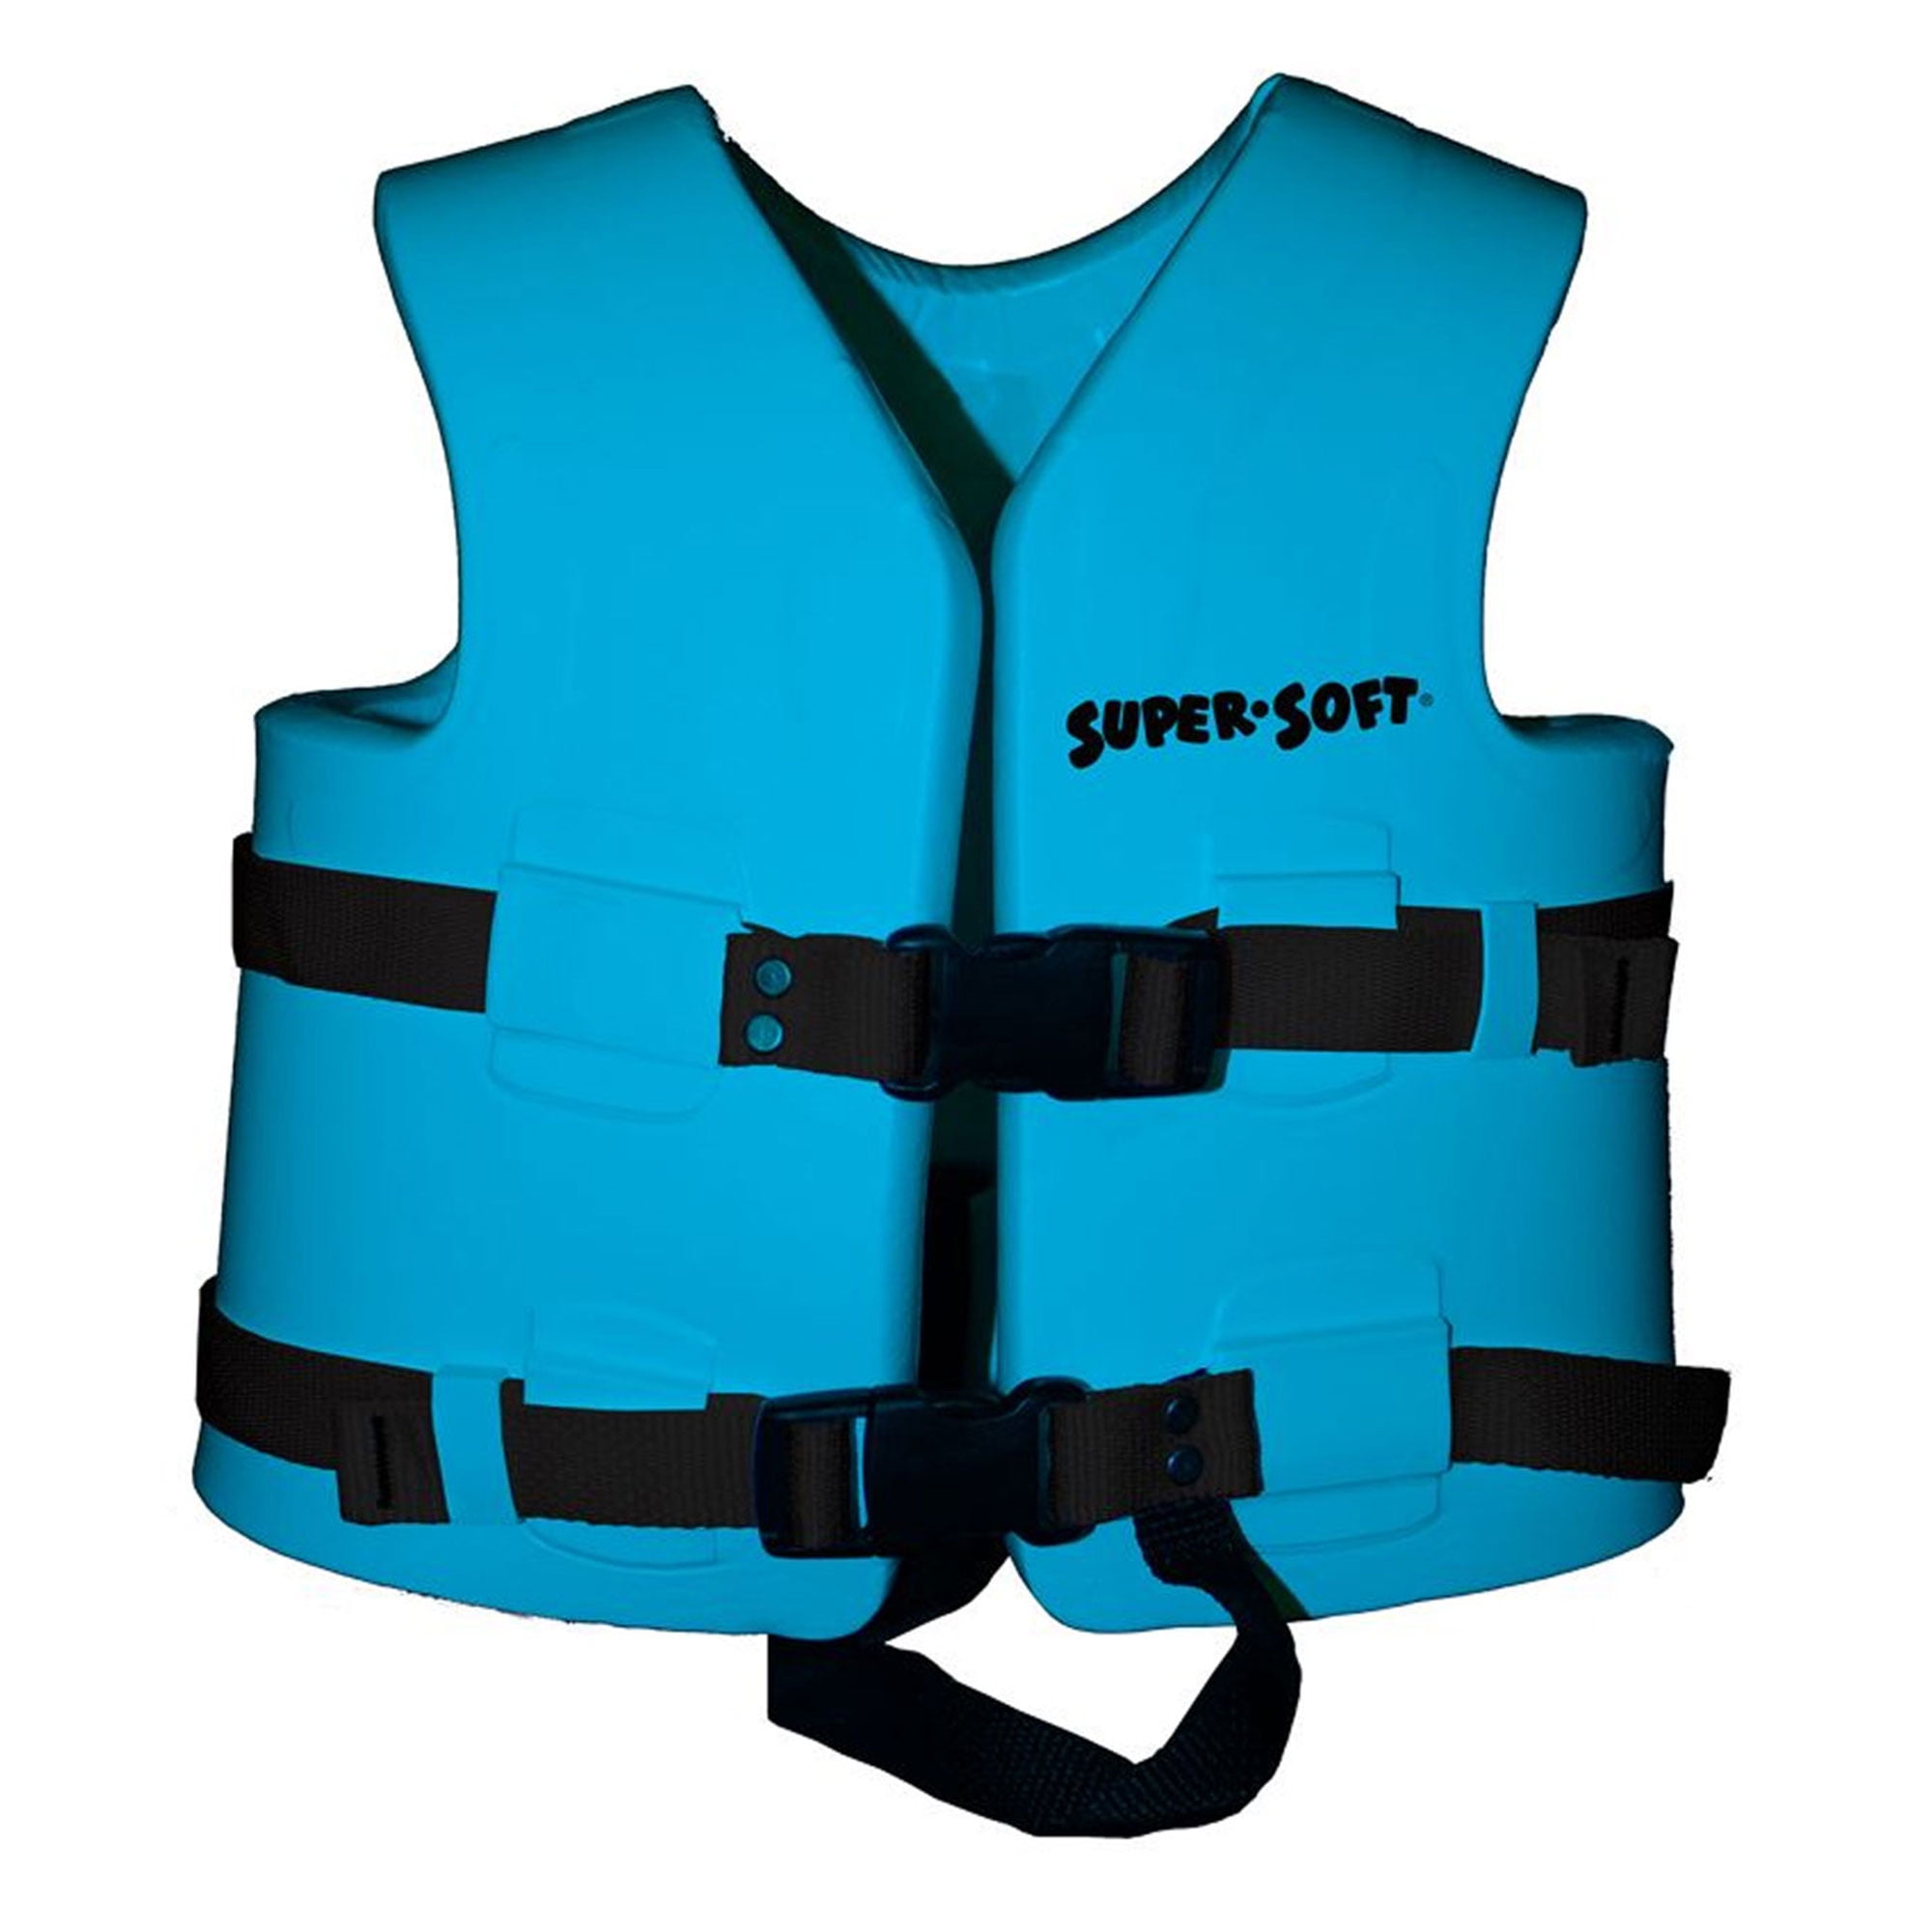 TRC Recreation Soft Youth Life Jacket Swim Vest, Medium, Fierce Green -